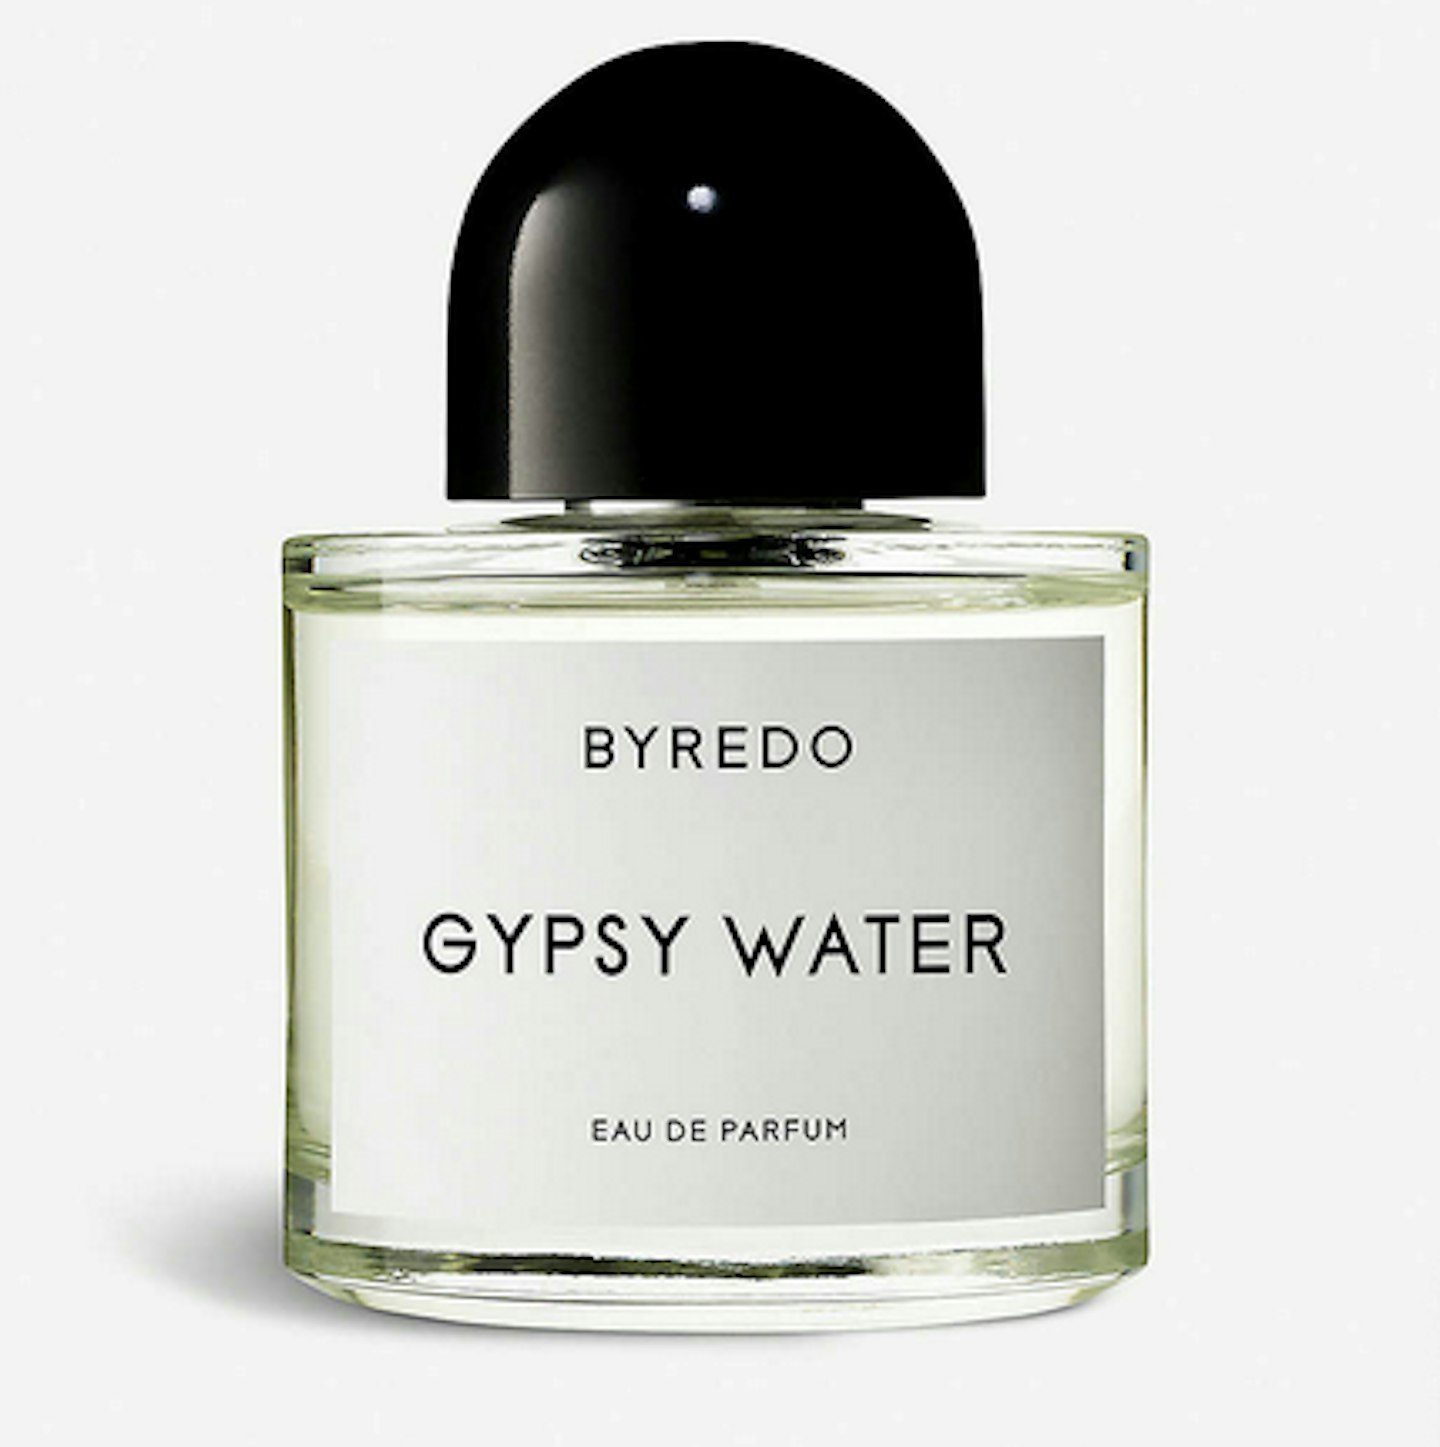 Byredo Gypsy Water Eau de Parfum 50ml, £115